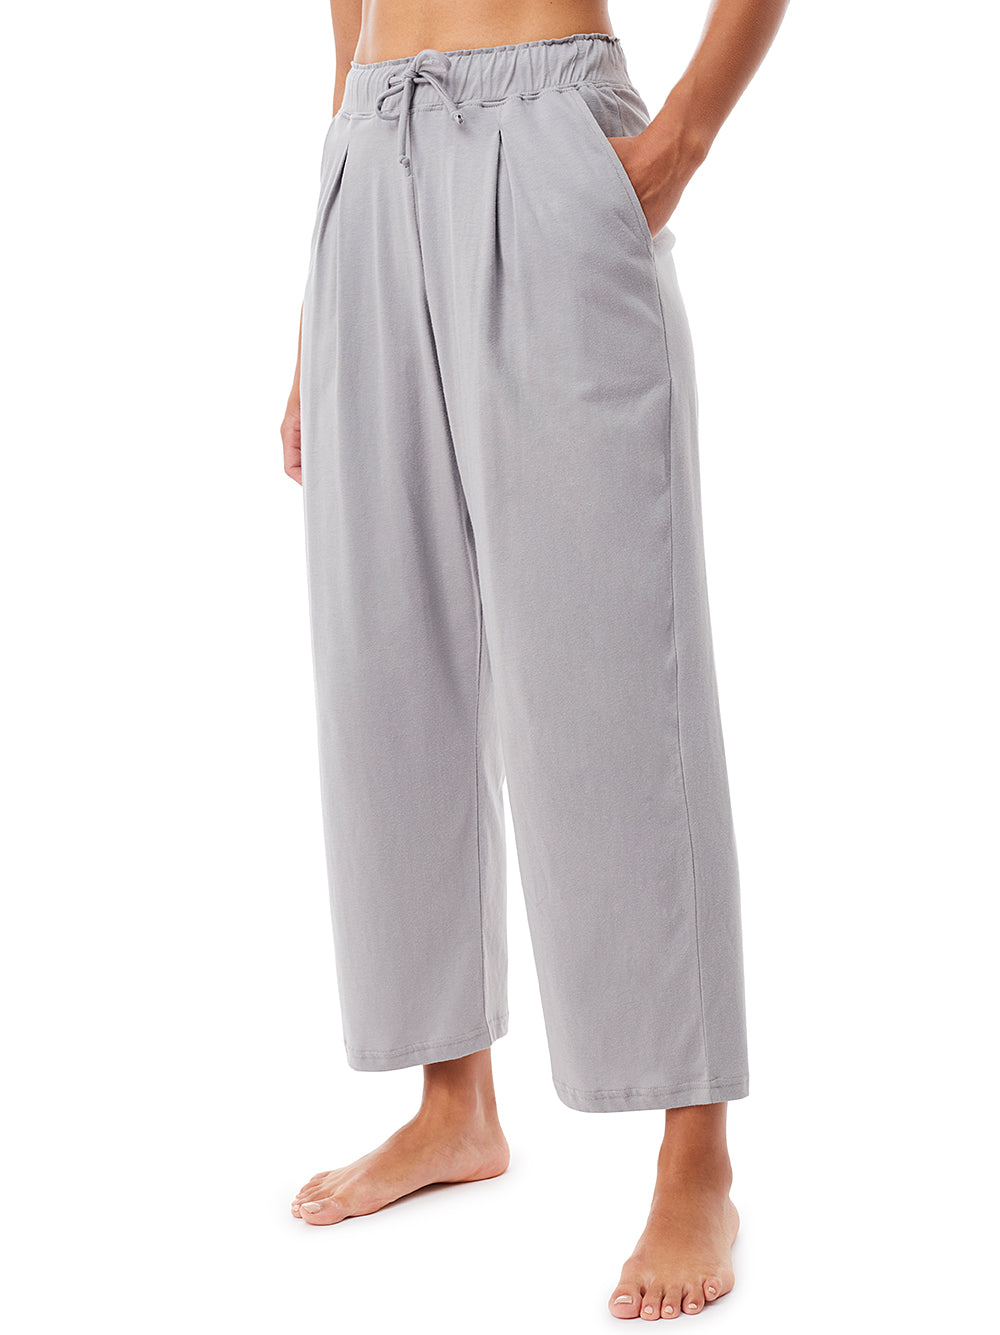 Mandala W's Retro Pants - 100% Organic Cotton Street Pants